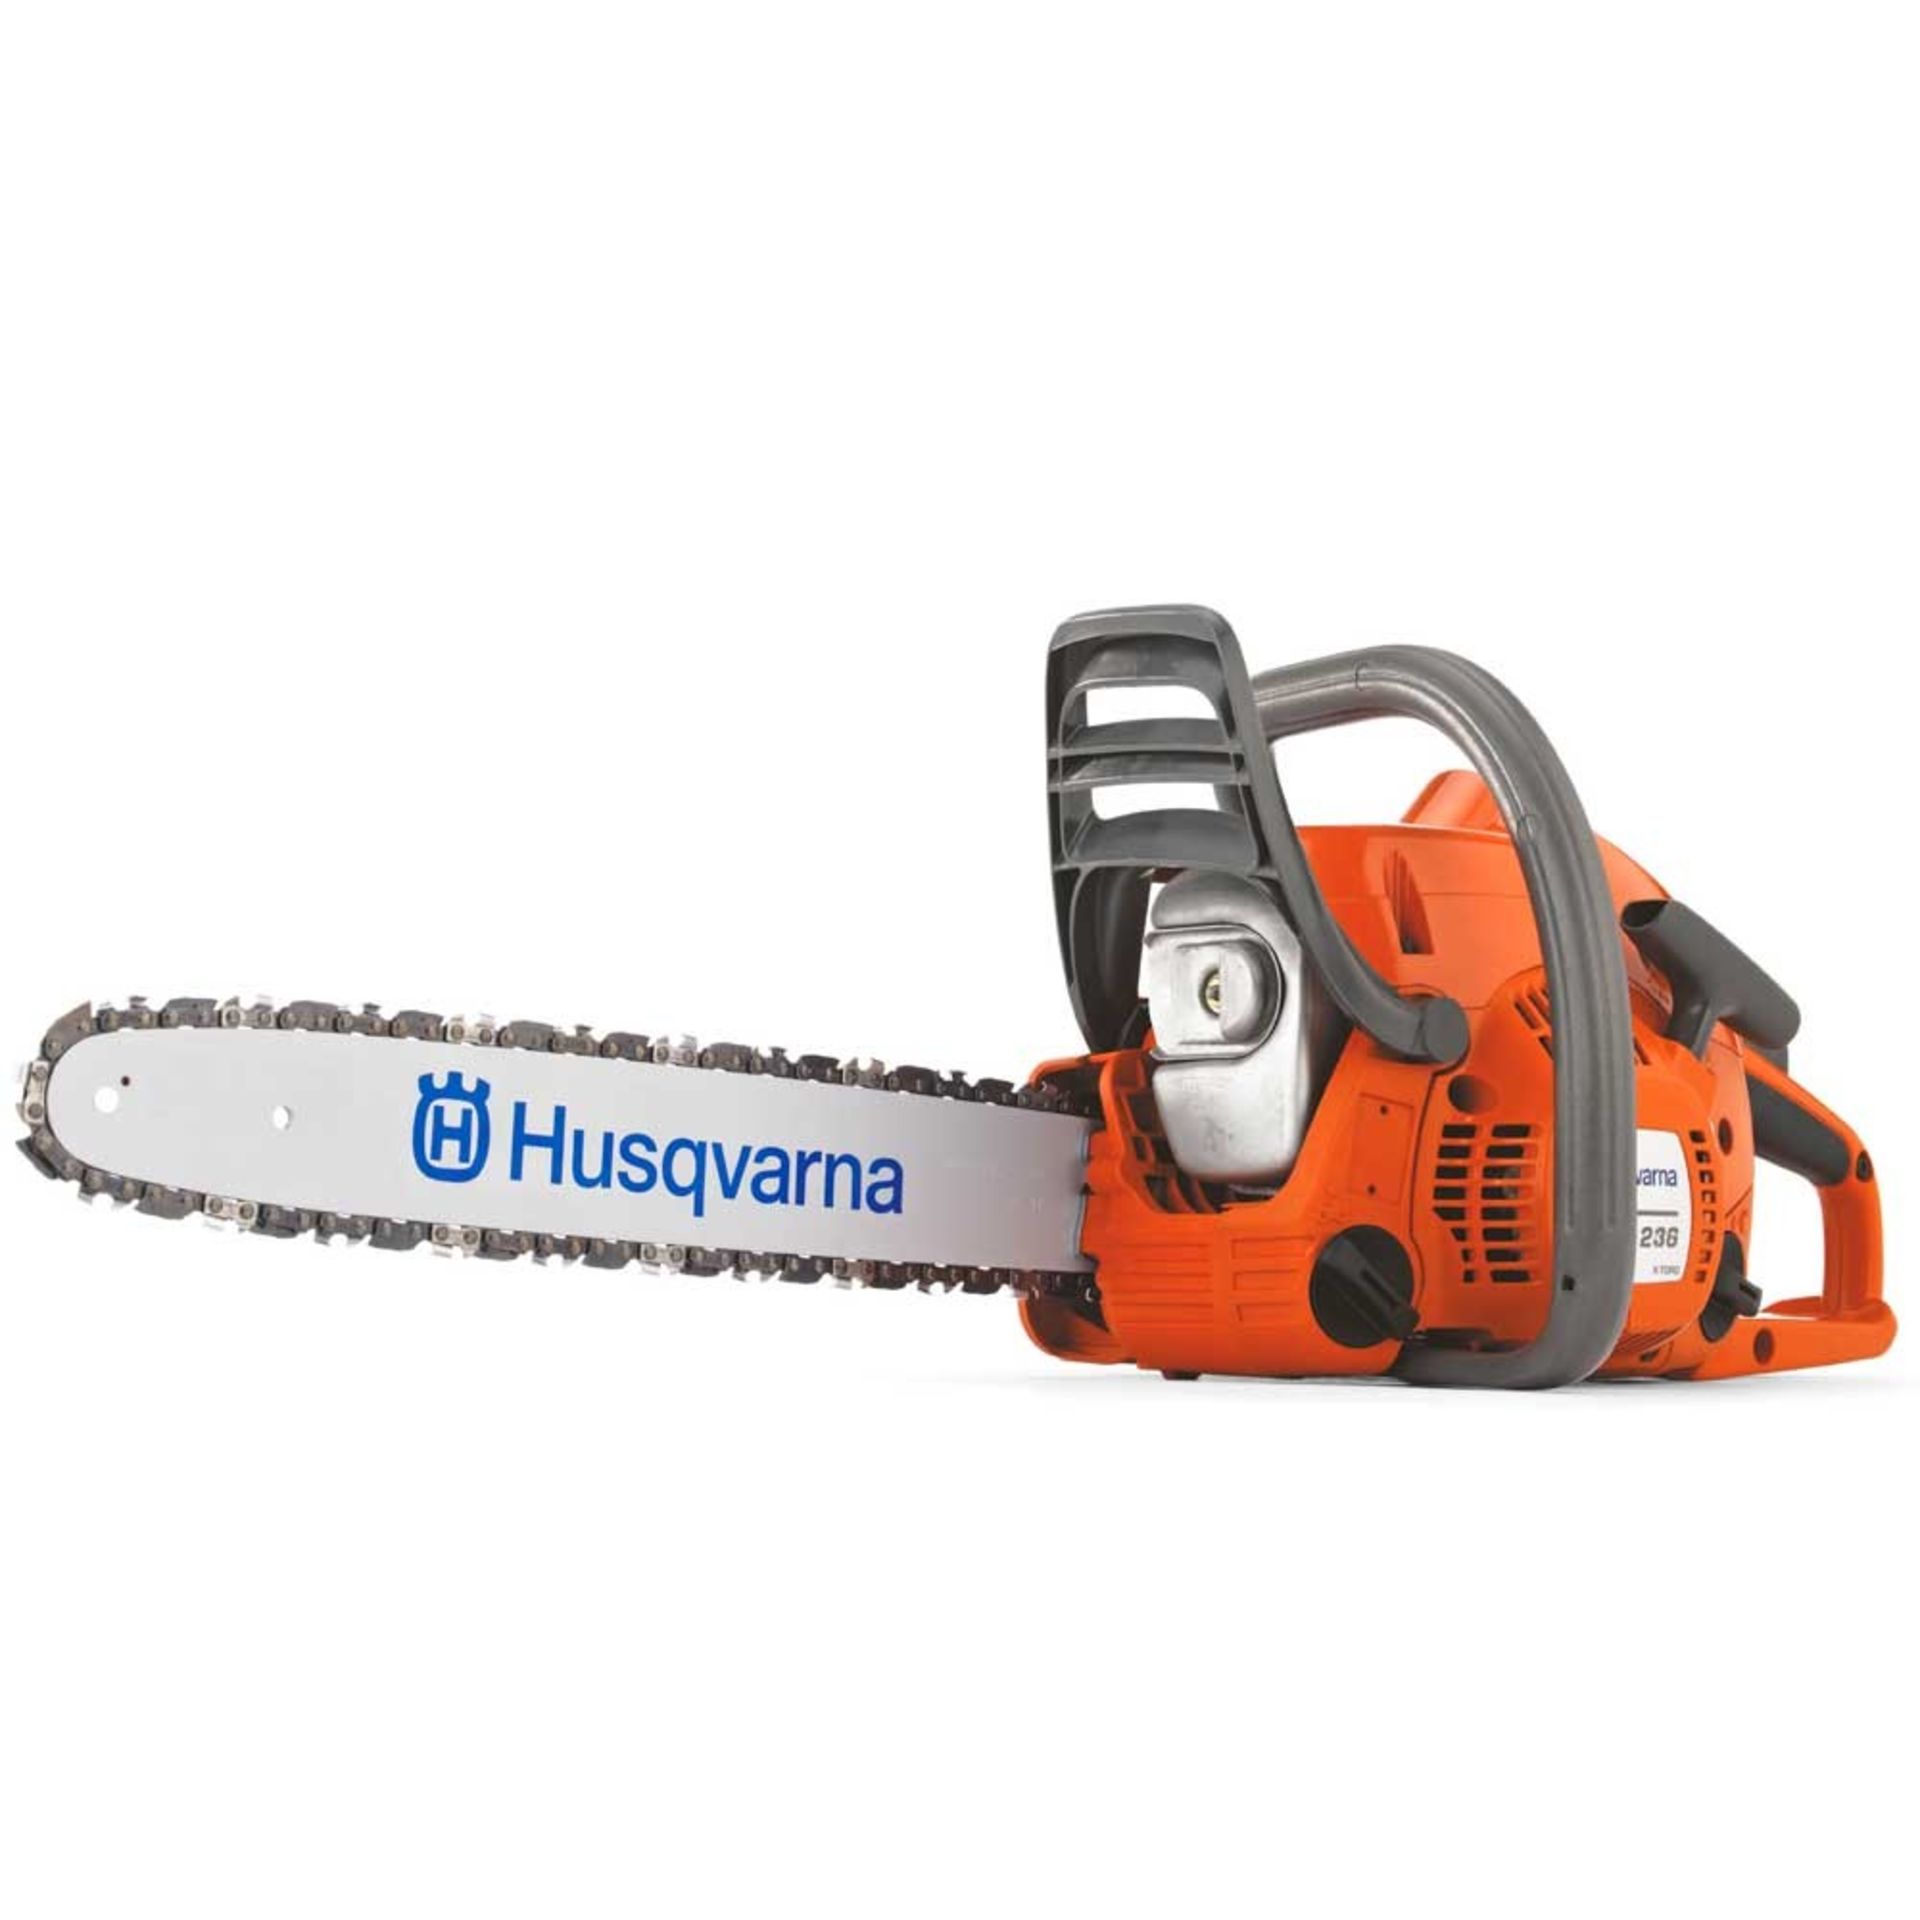 New Unused Husqvarna 236 Chainsaw with 14" Blade